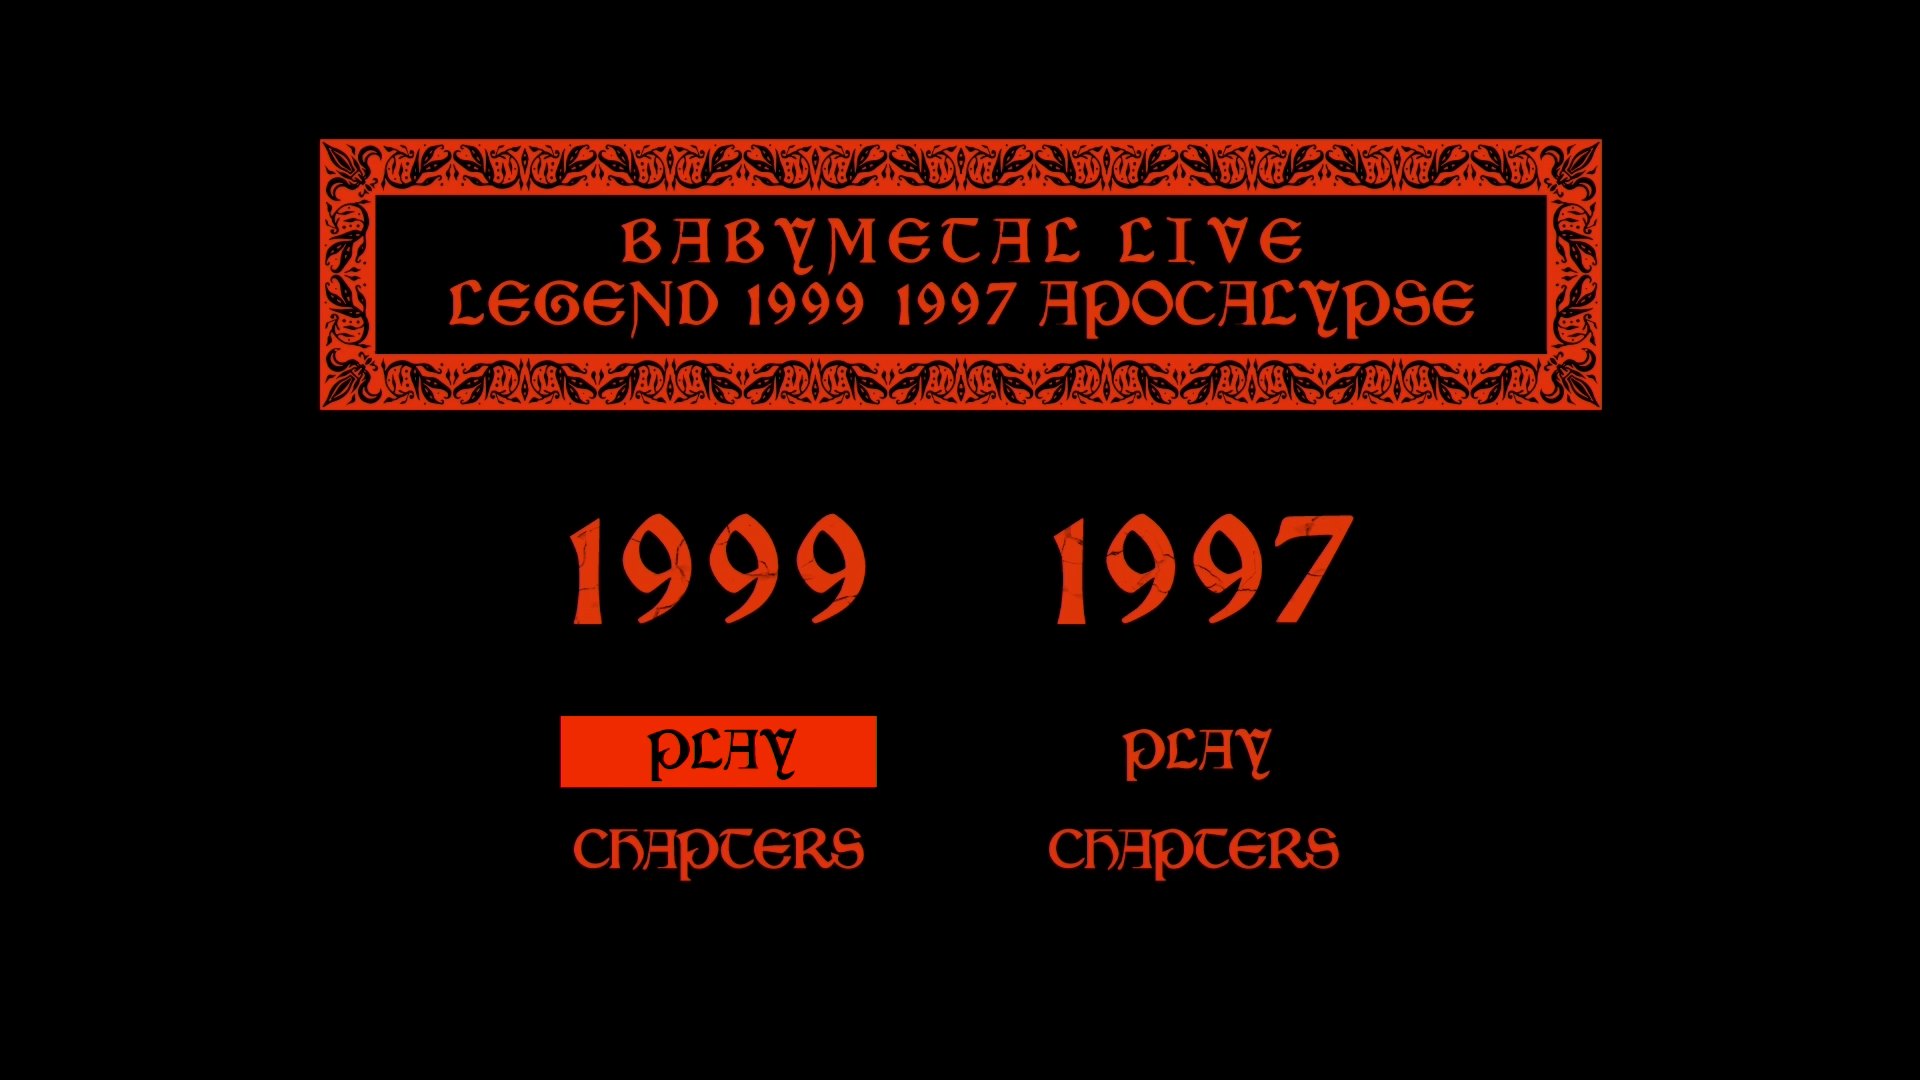 BabyMetal Live Legend 1999 1997 Apocalypse Review | hXcHector.com